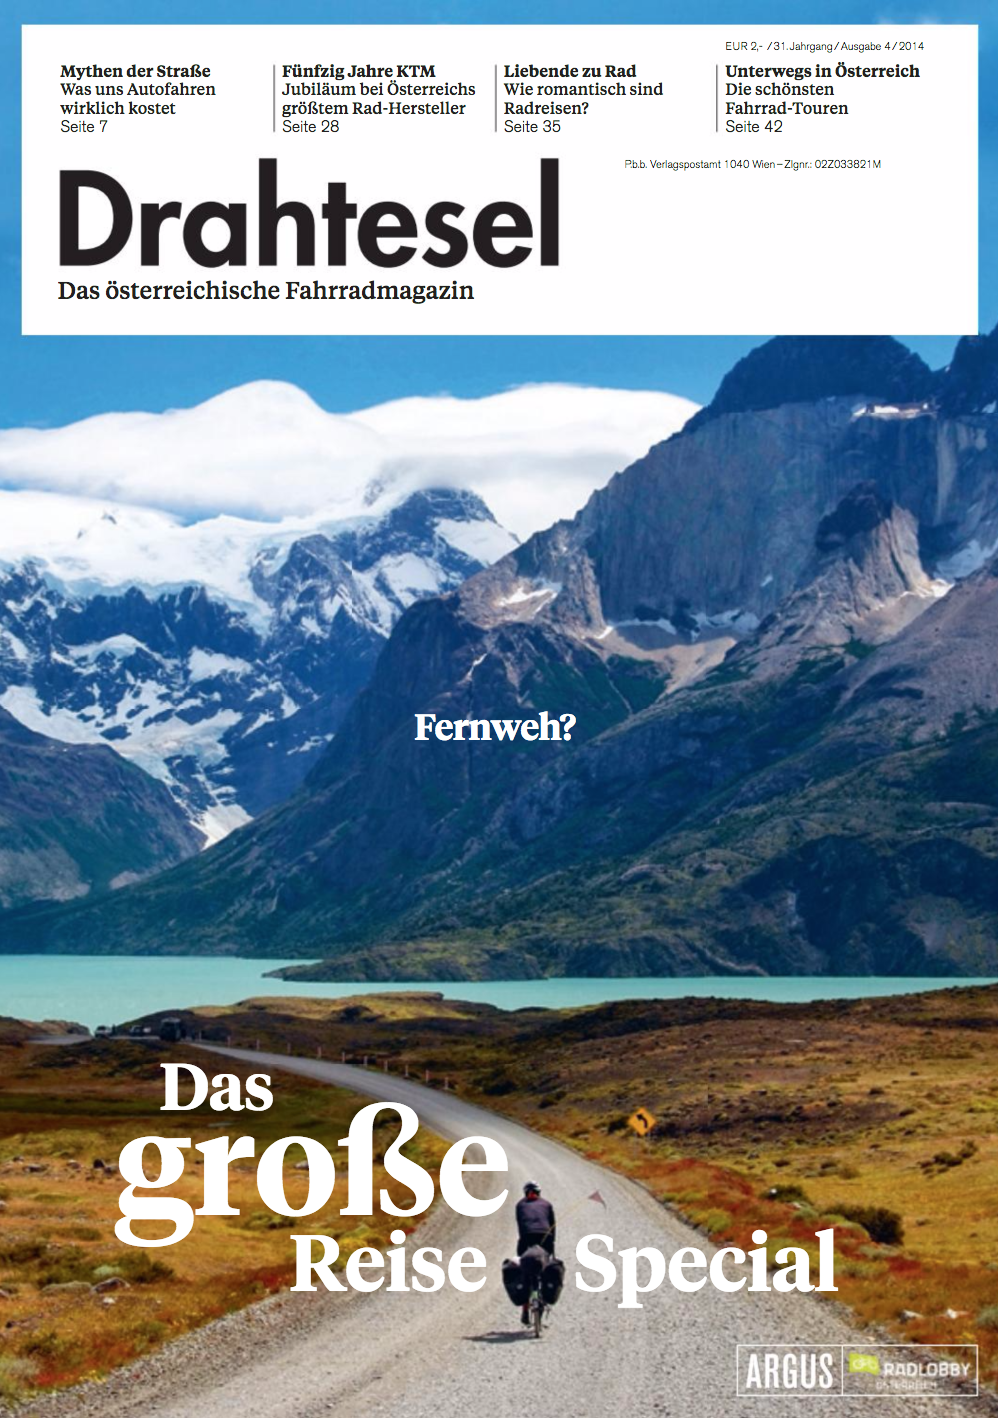 Drahtesel Cover 4/2014